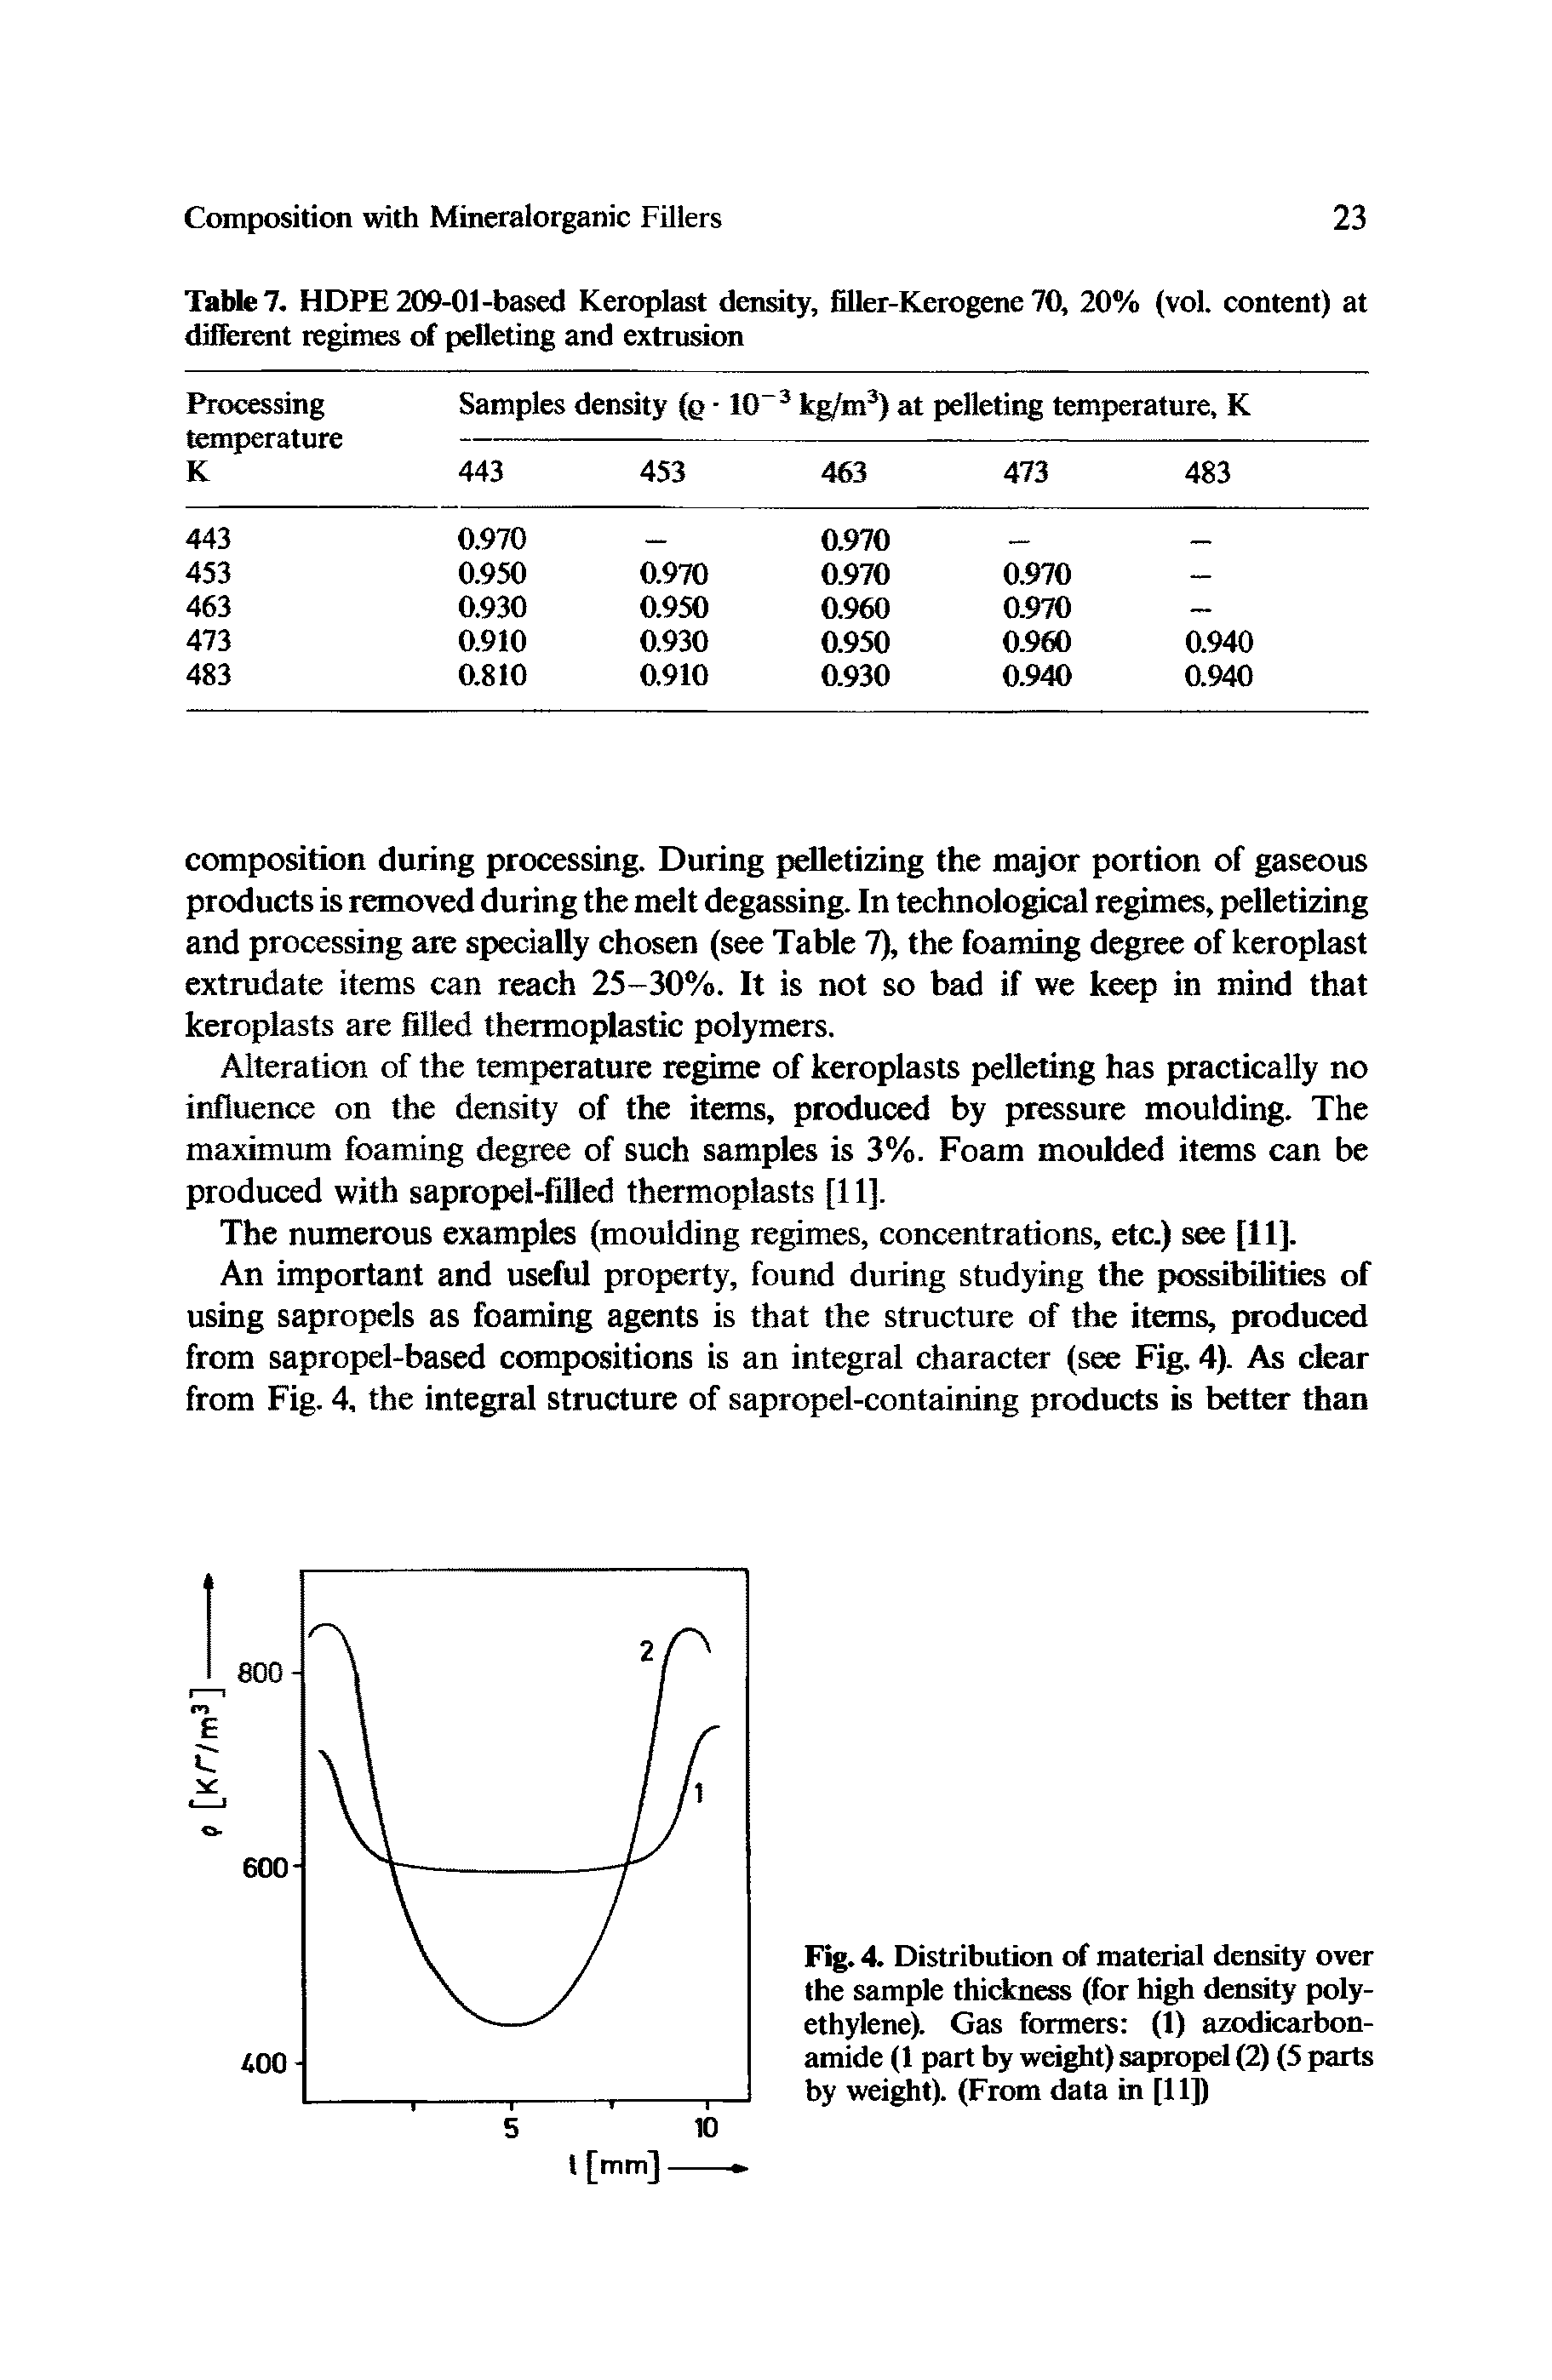 Table . HOPE209-01-based Keroplast density, filler-Kerogene70, 20% (vol. content) at different regimes of pelleting and extrusion...